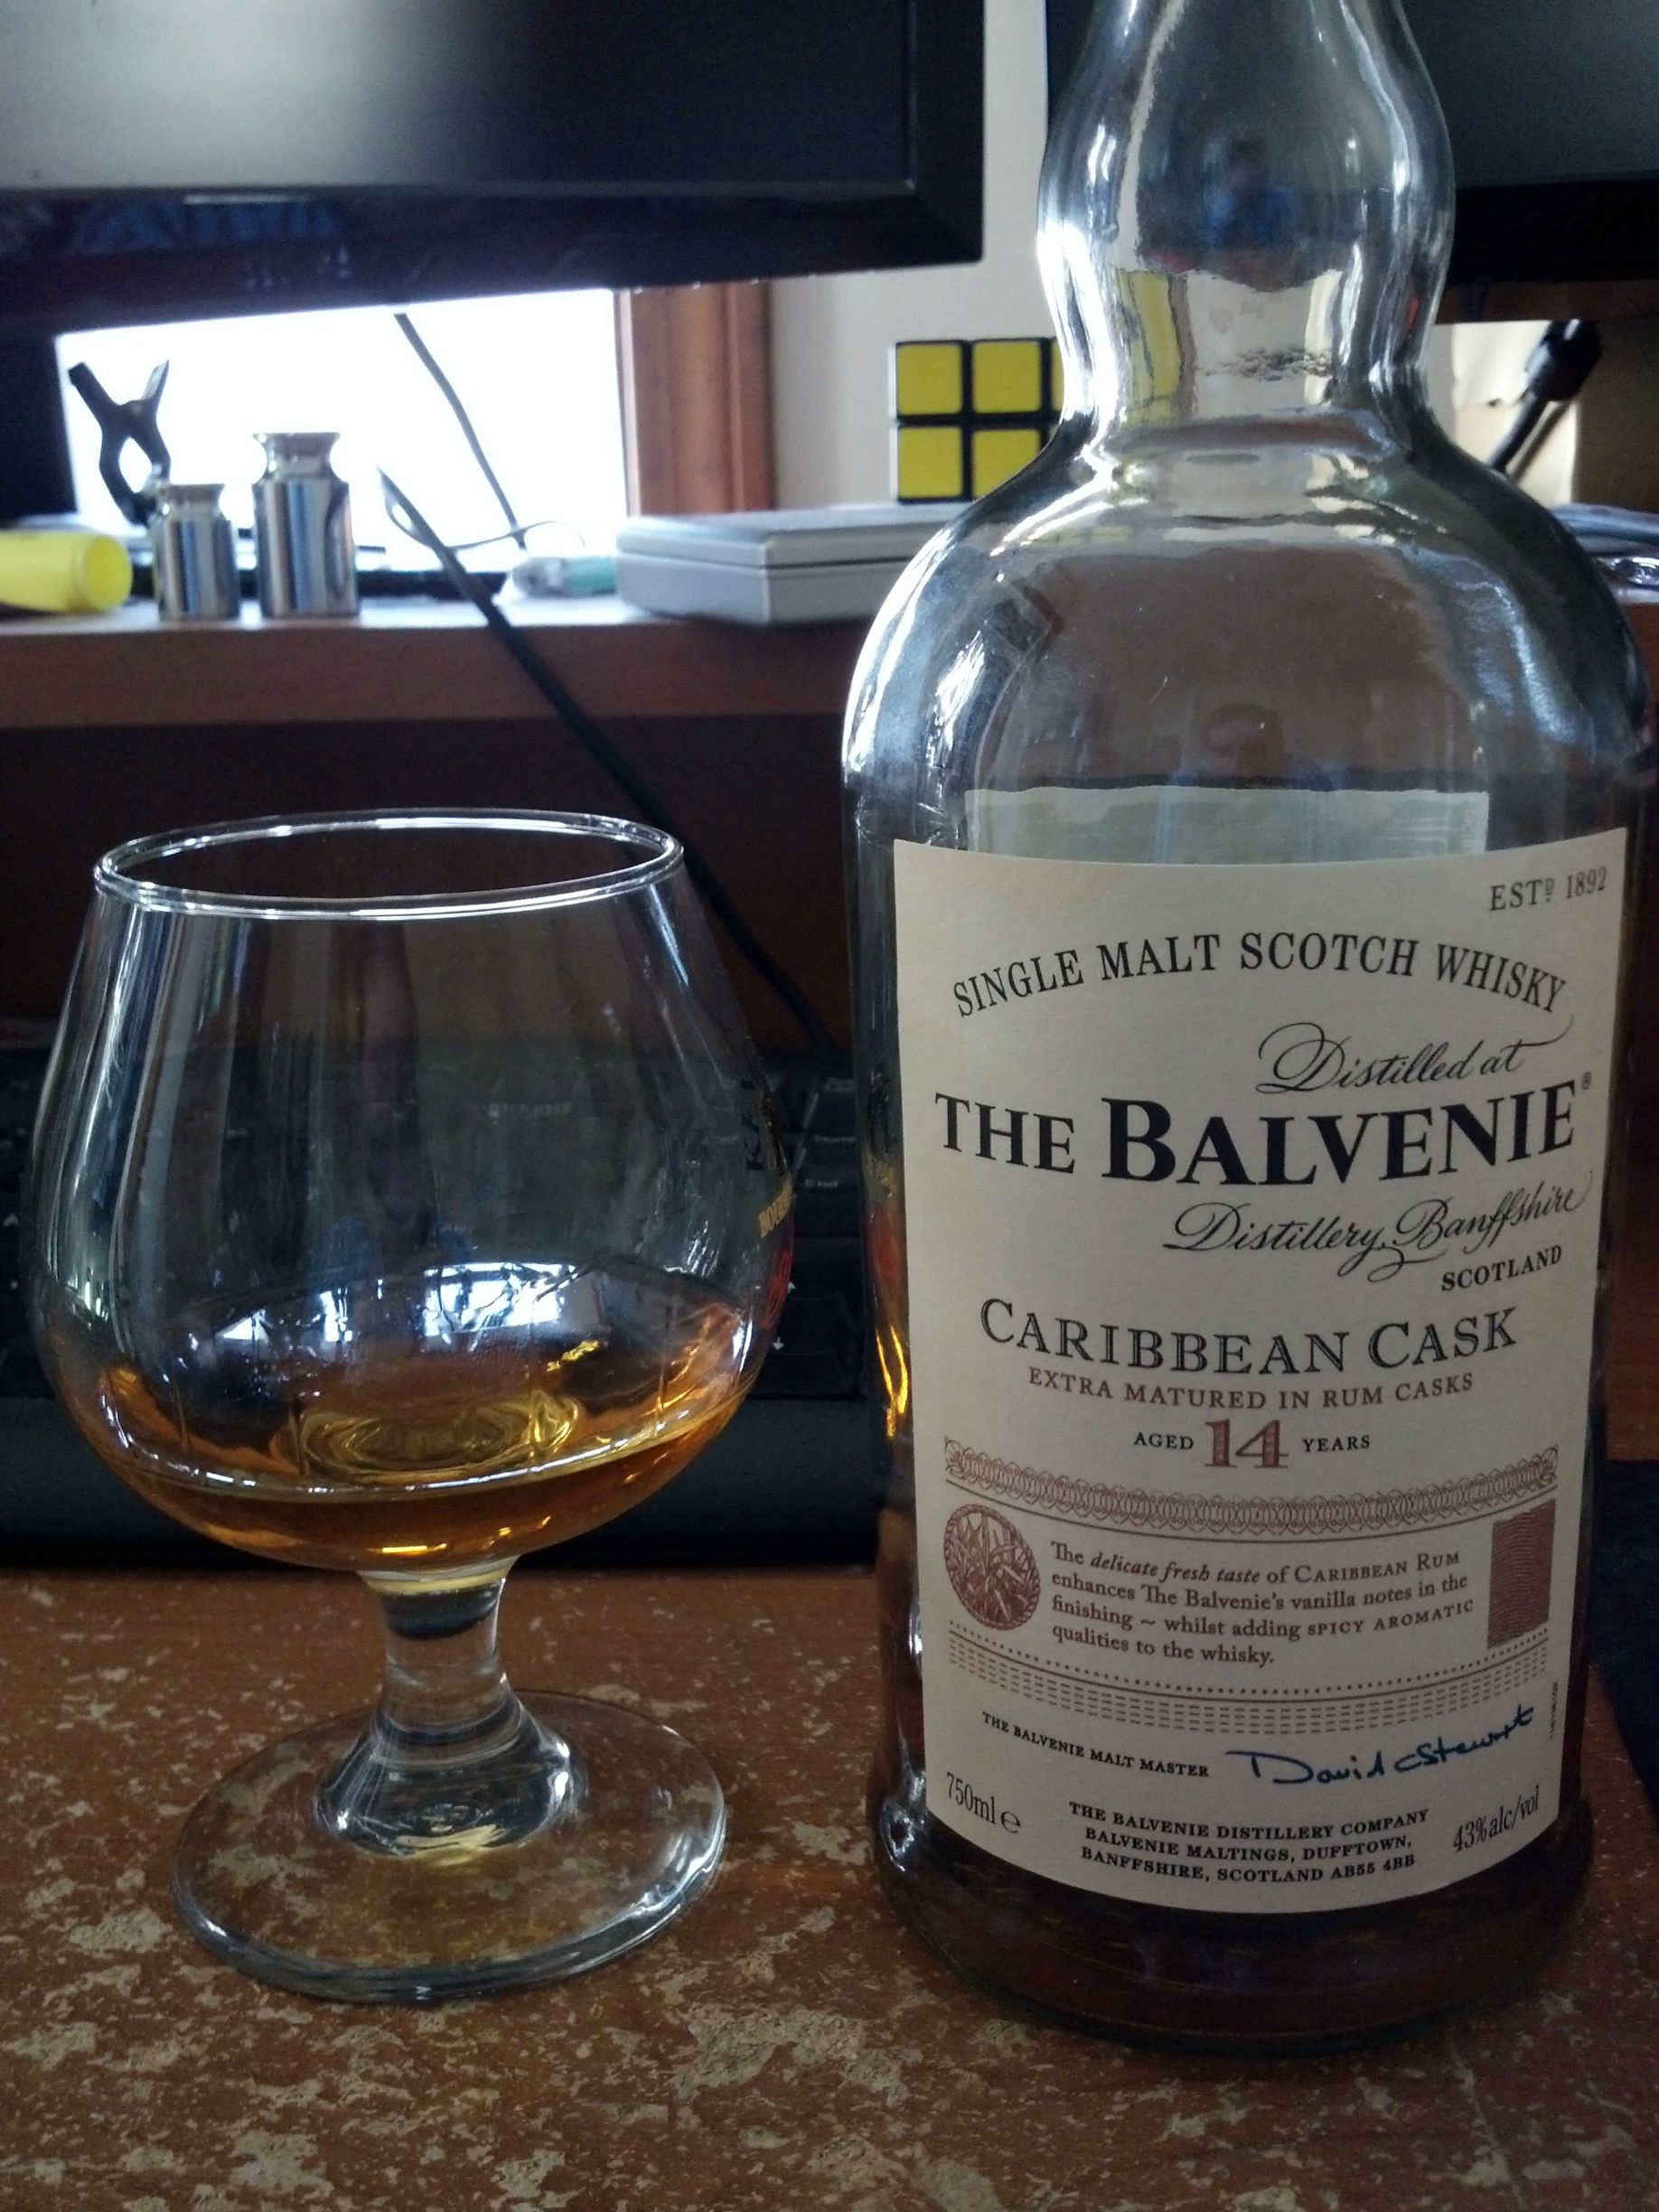 The Balvenie Caribbean Cask – single malt scotch